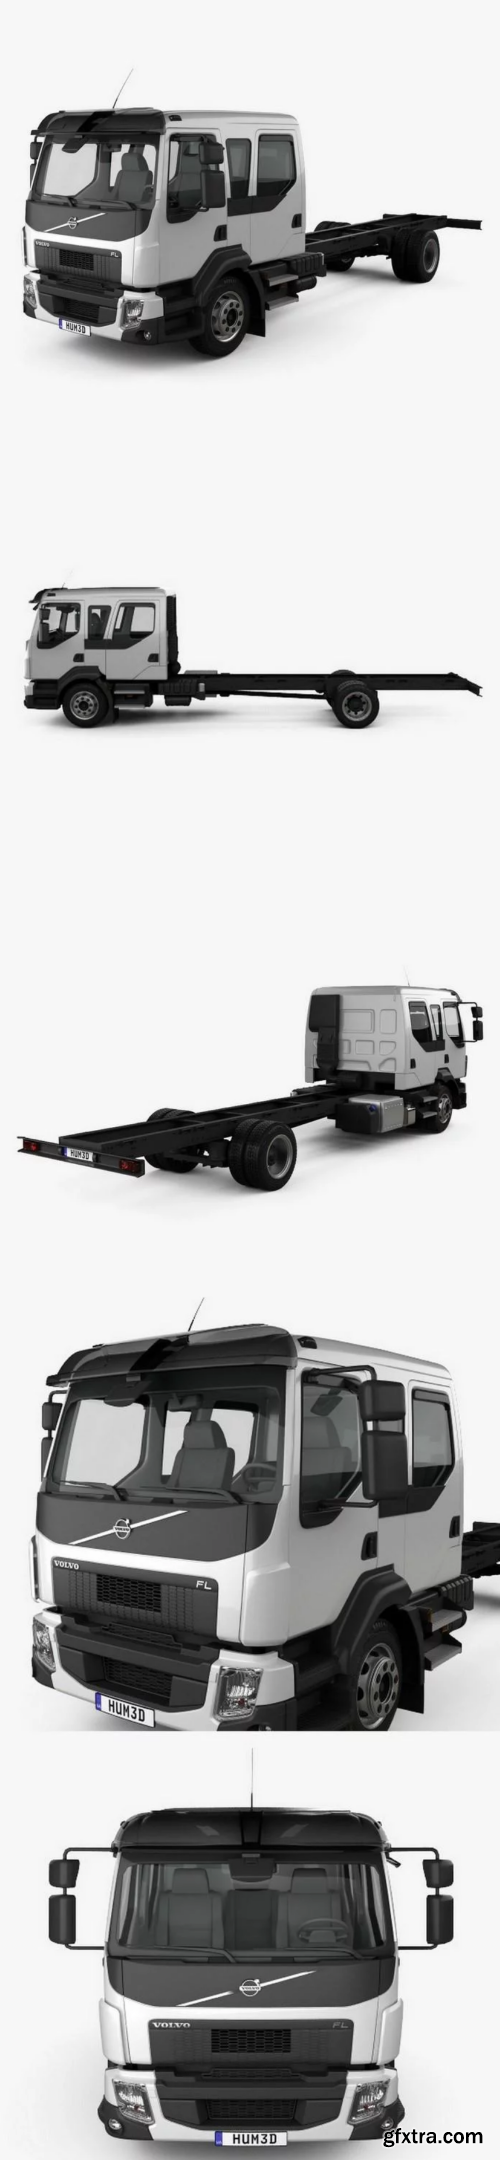 Volvo FL Crew Cab Chassis Truck 2013